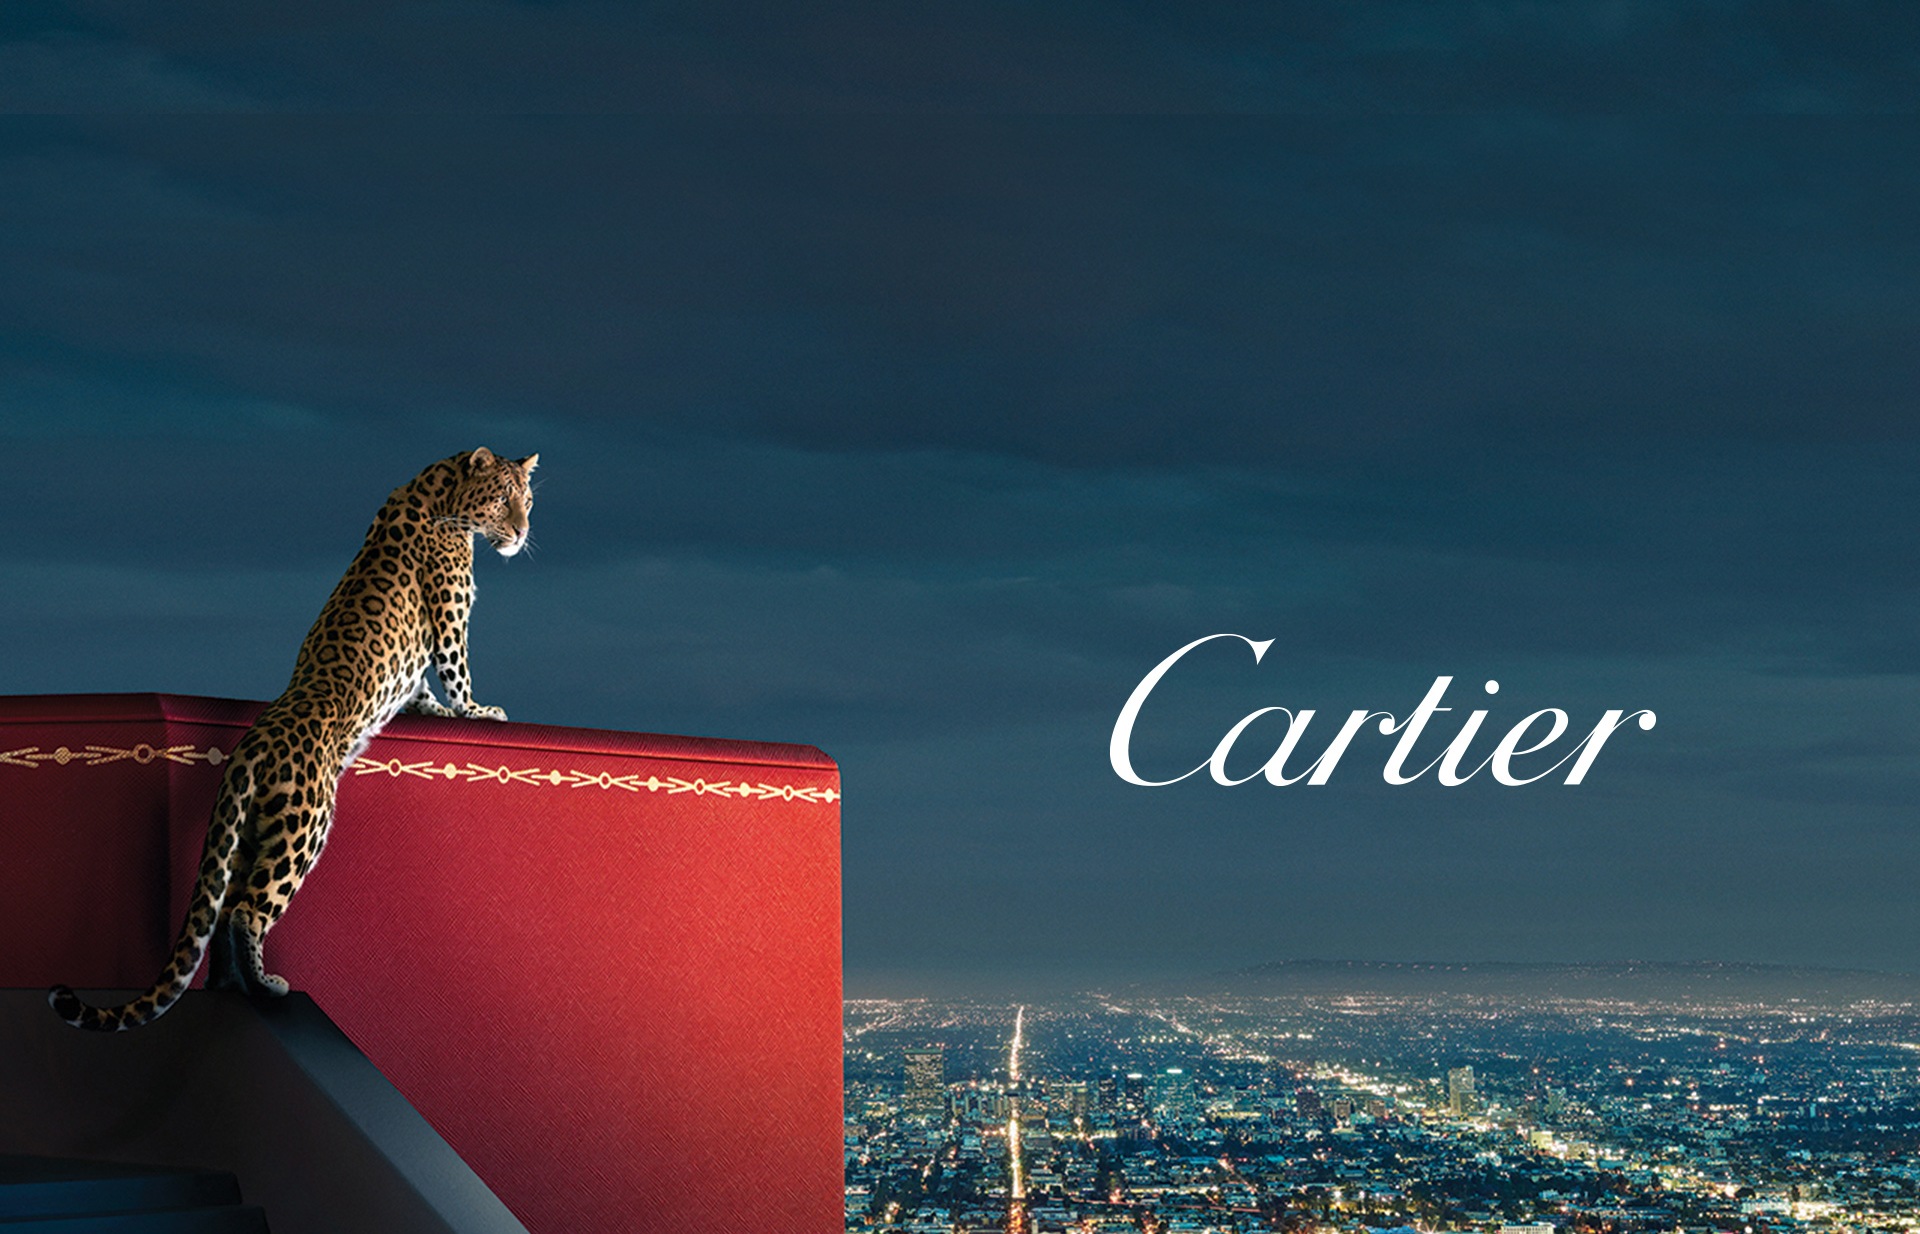 卡地亚 (Cartier)